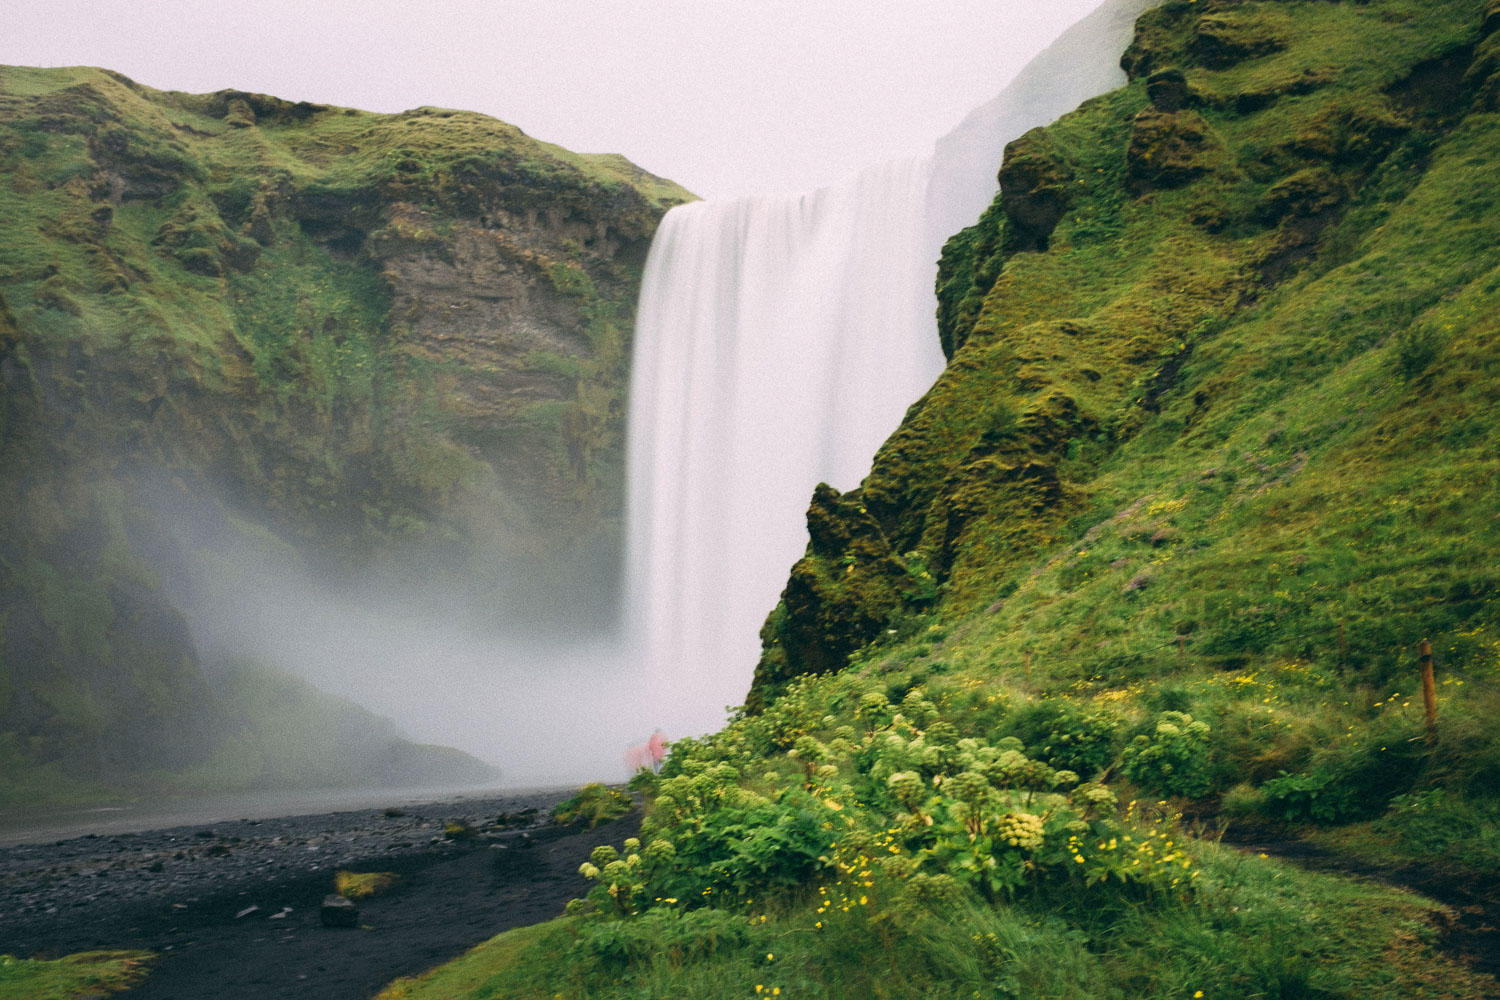 Iceland tops travel influencer @inbetweenpics' list of favorite places